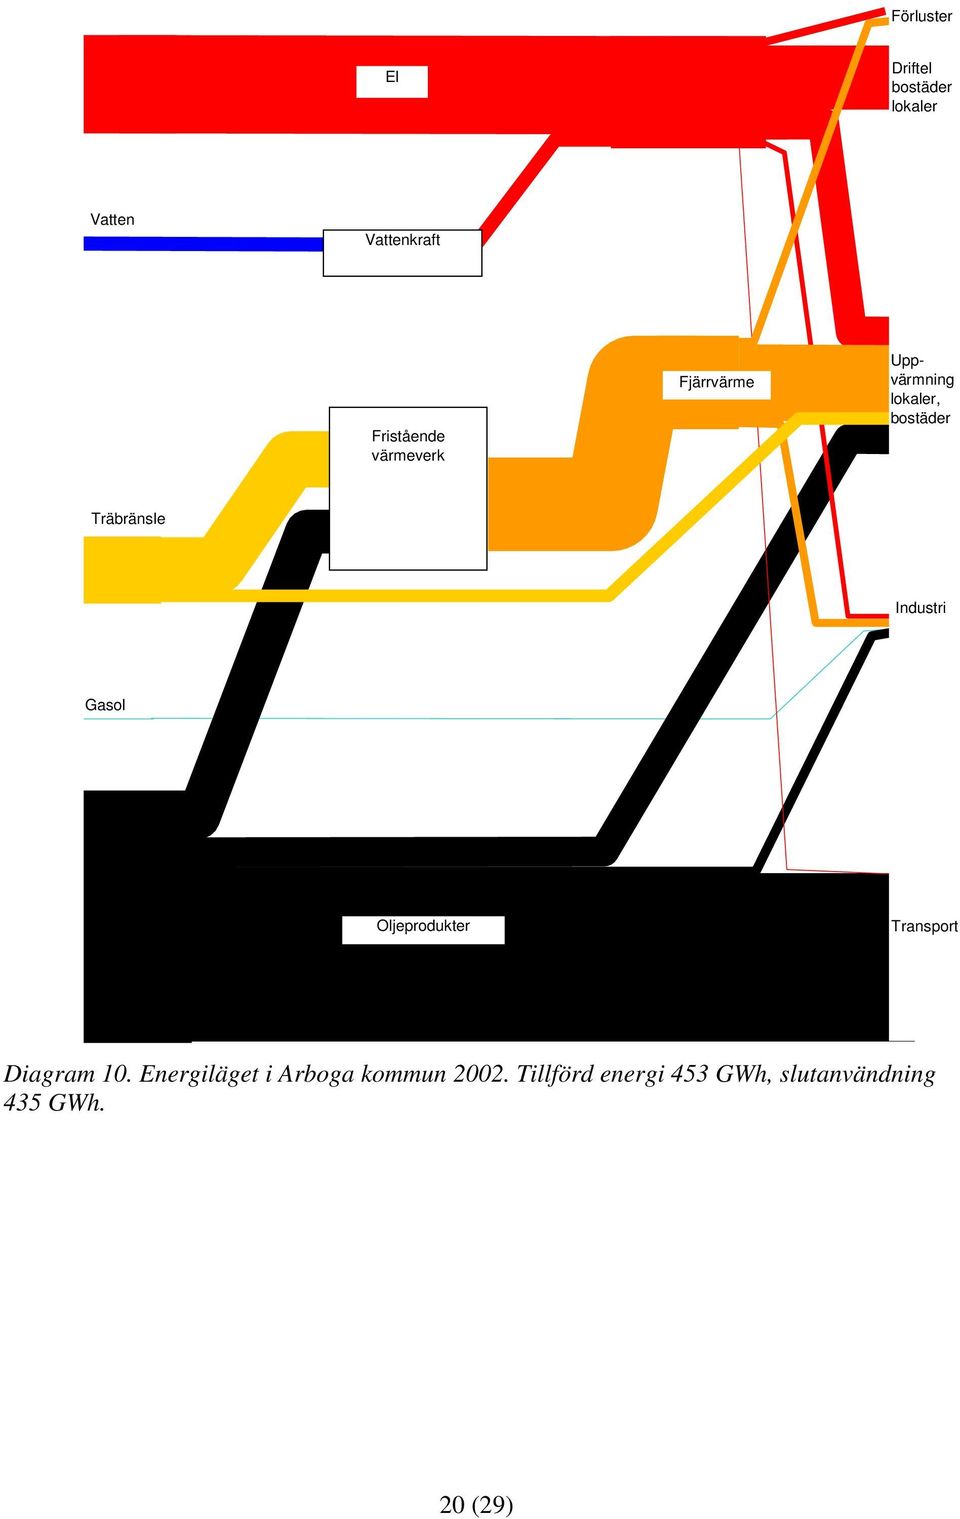 Gasol Oljeprodukter Transport Diagram 10.